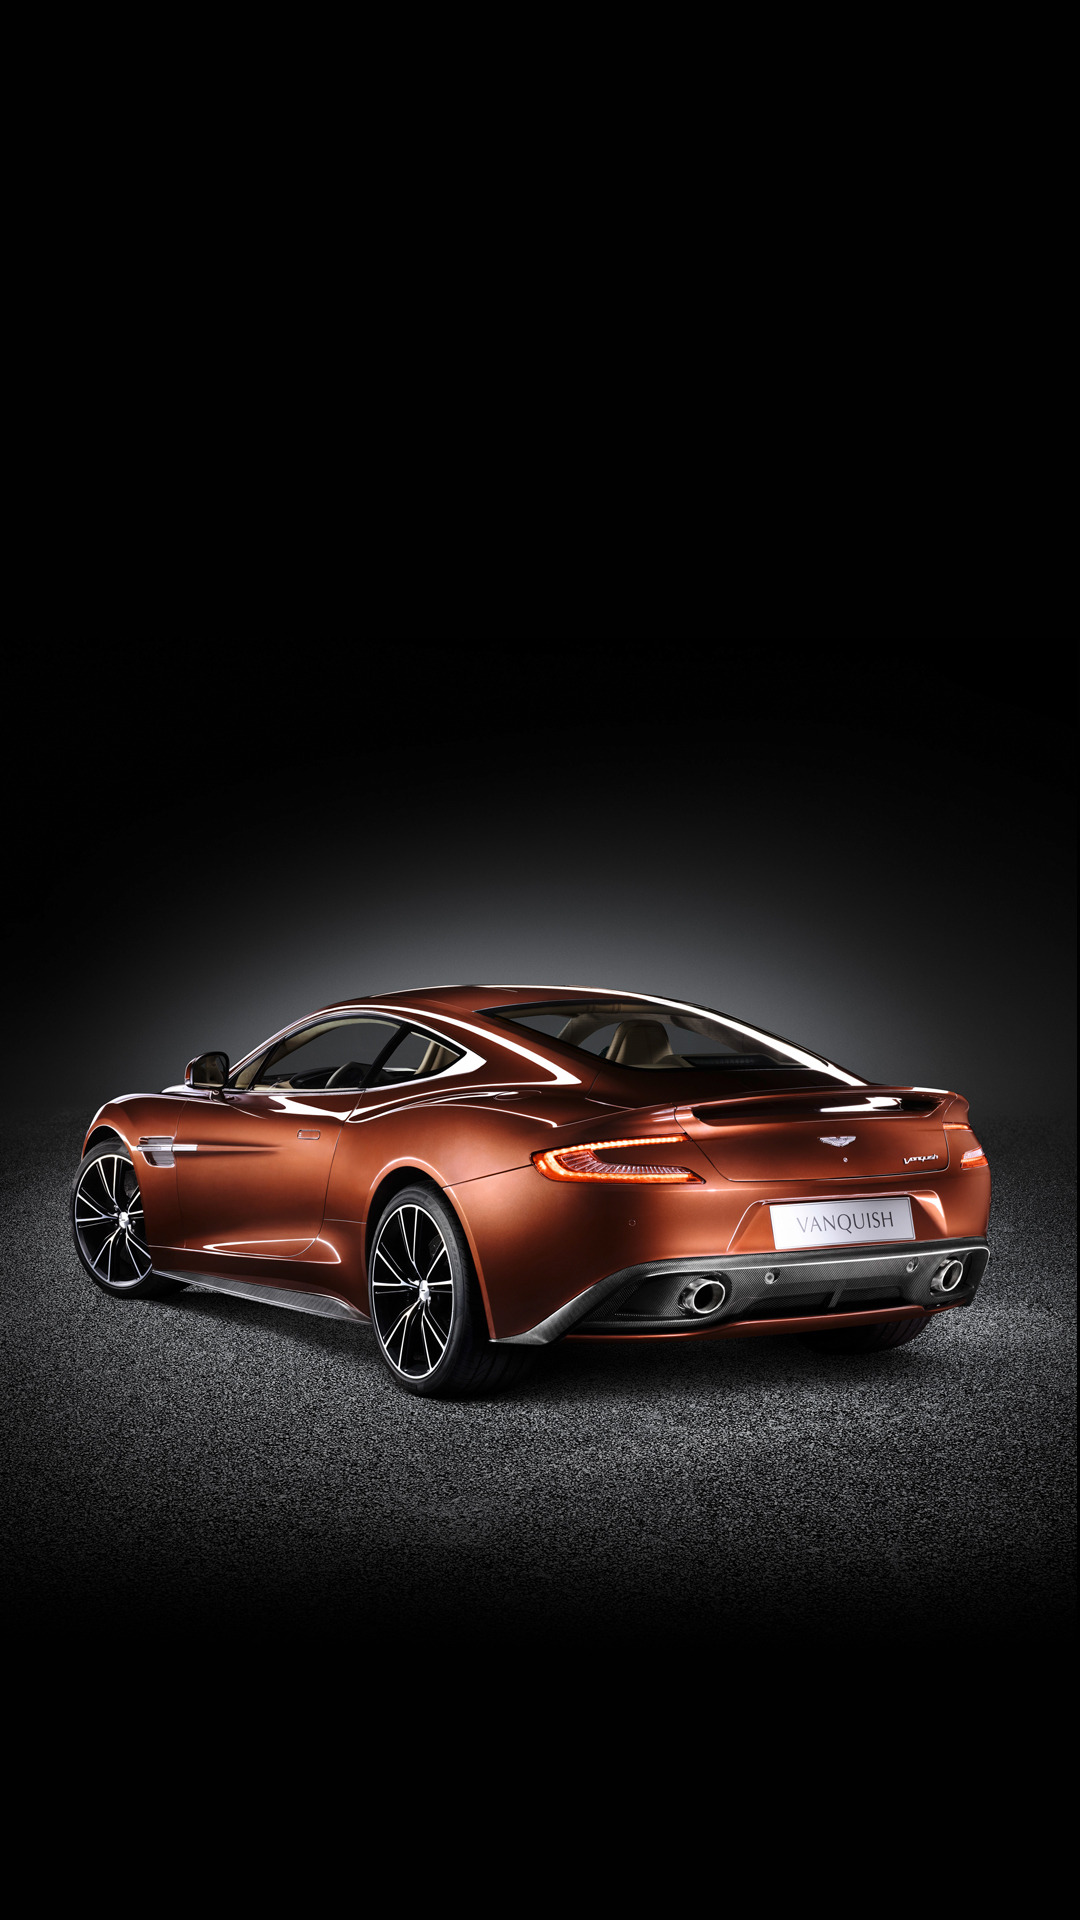 Car iPhone Plus Wallpaper Aston Martin Vanquish Photos Of Best